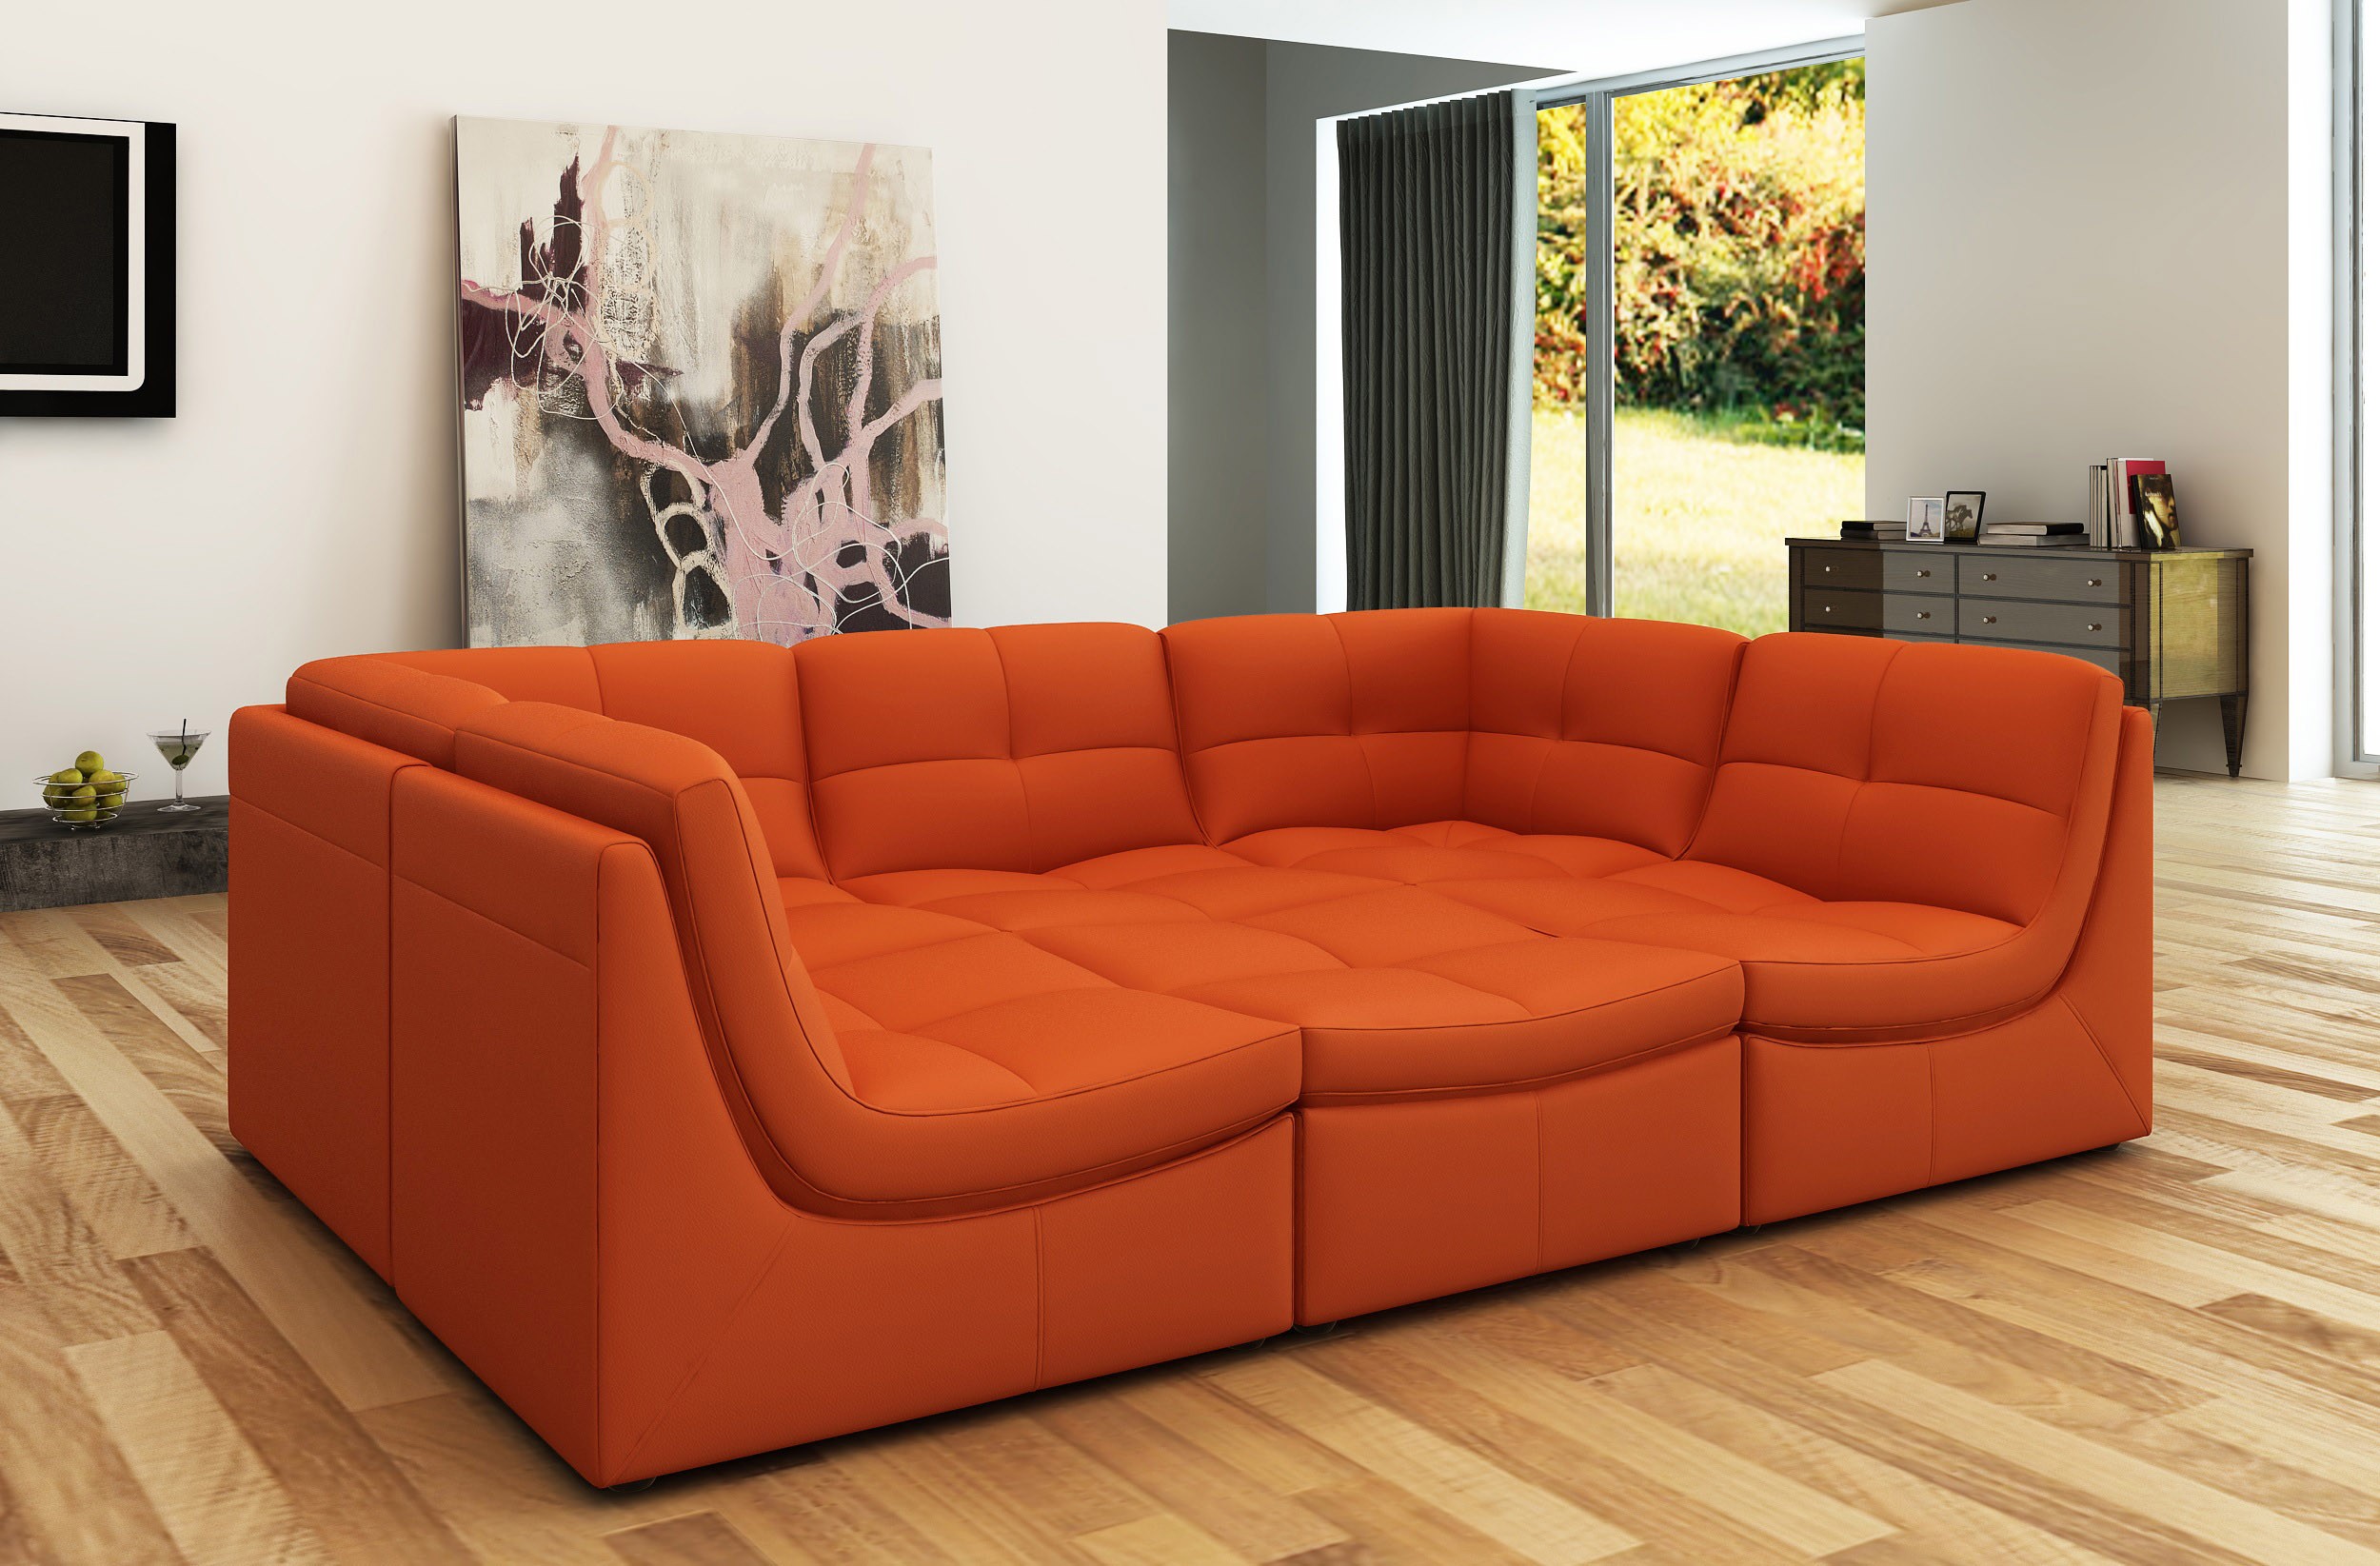 Elegant tufted leather curved corner sofa des moines iowa